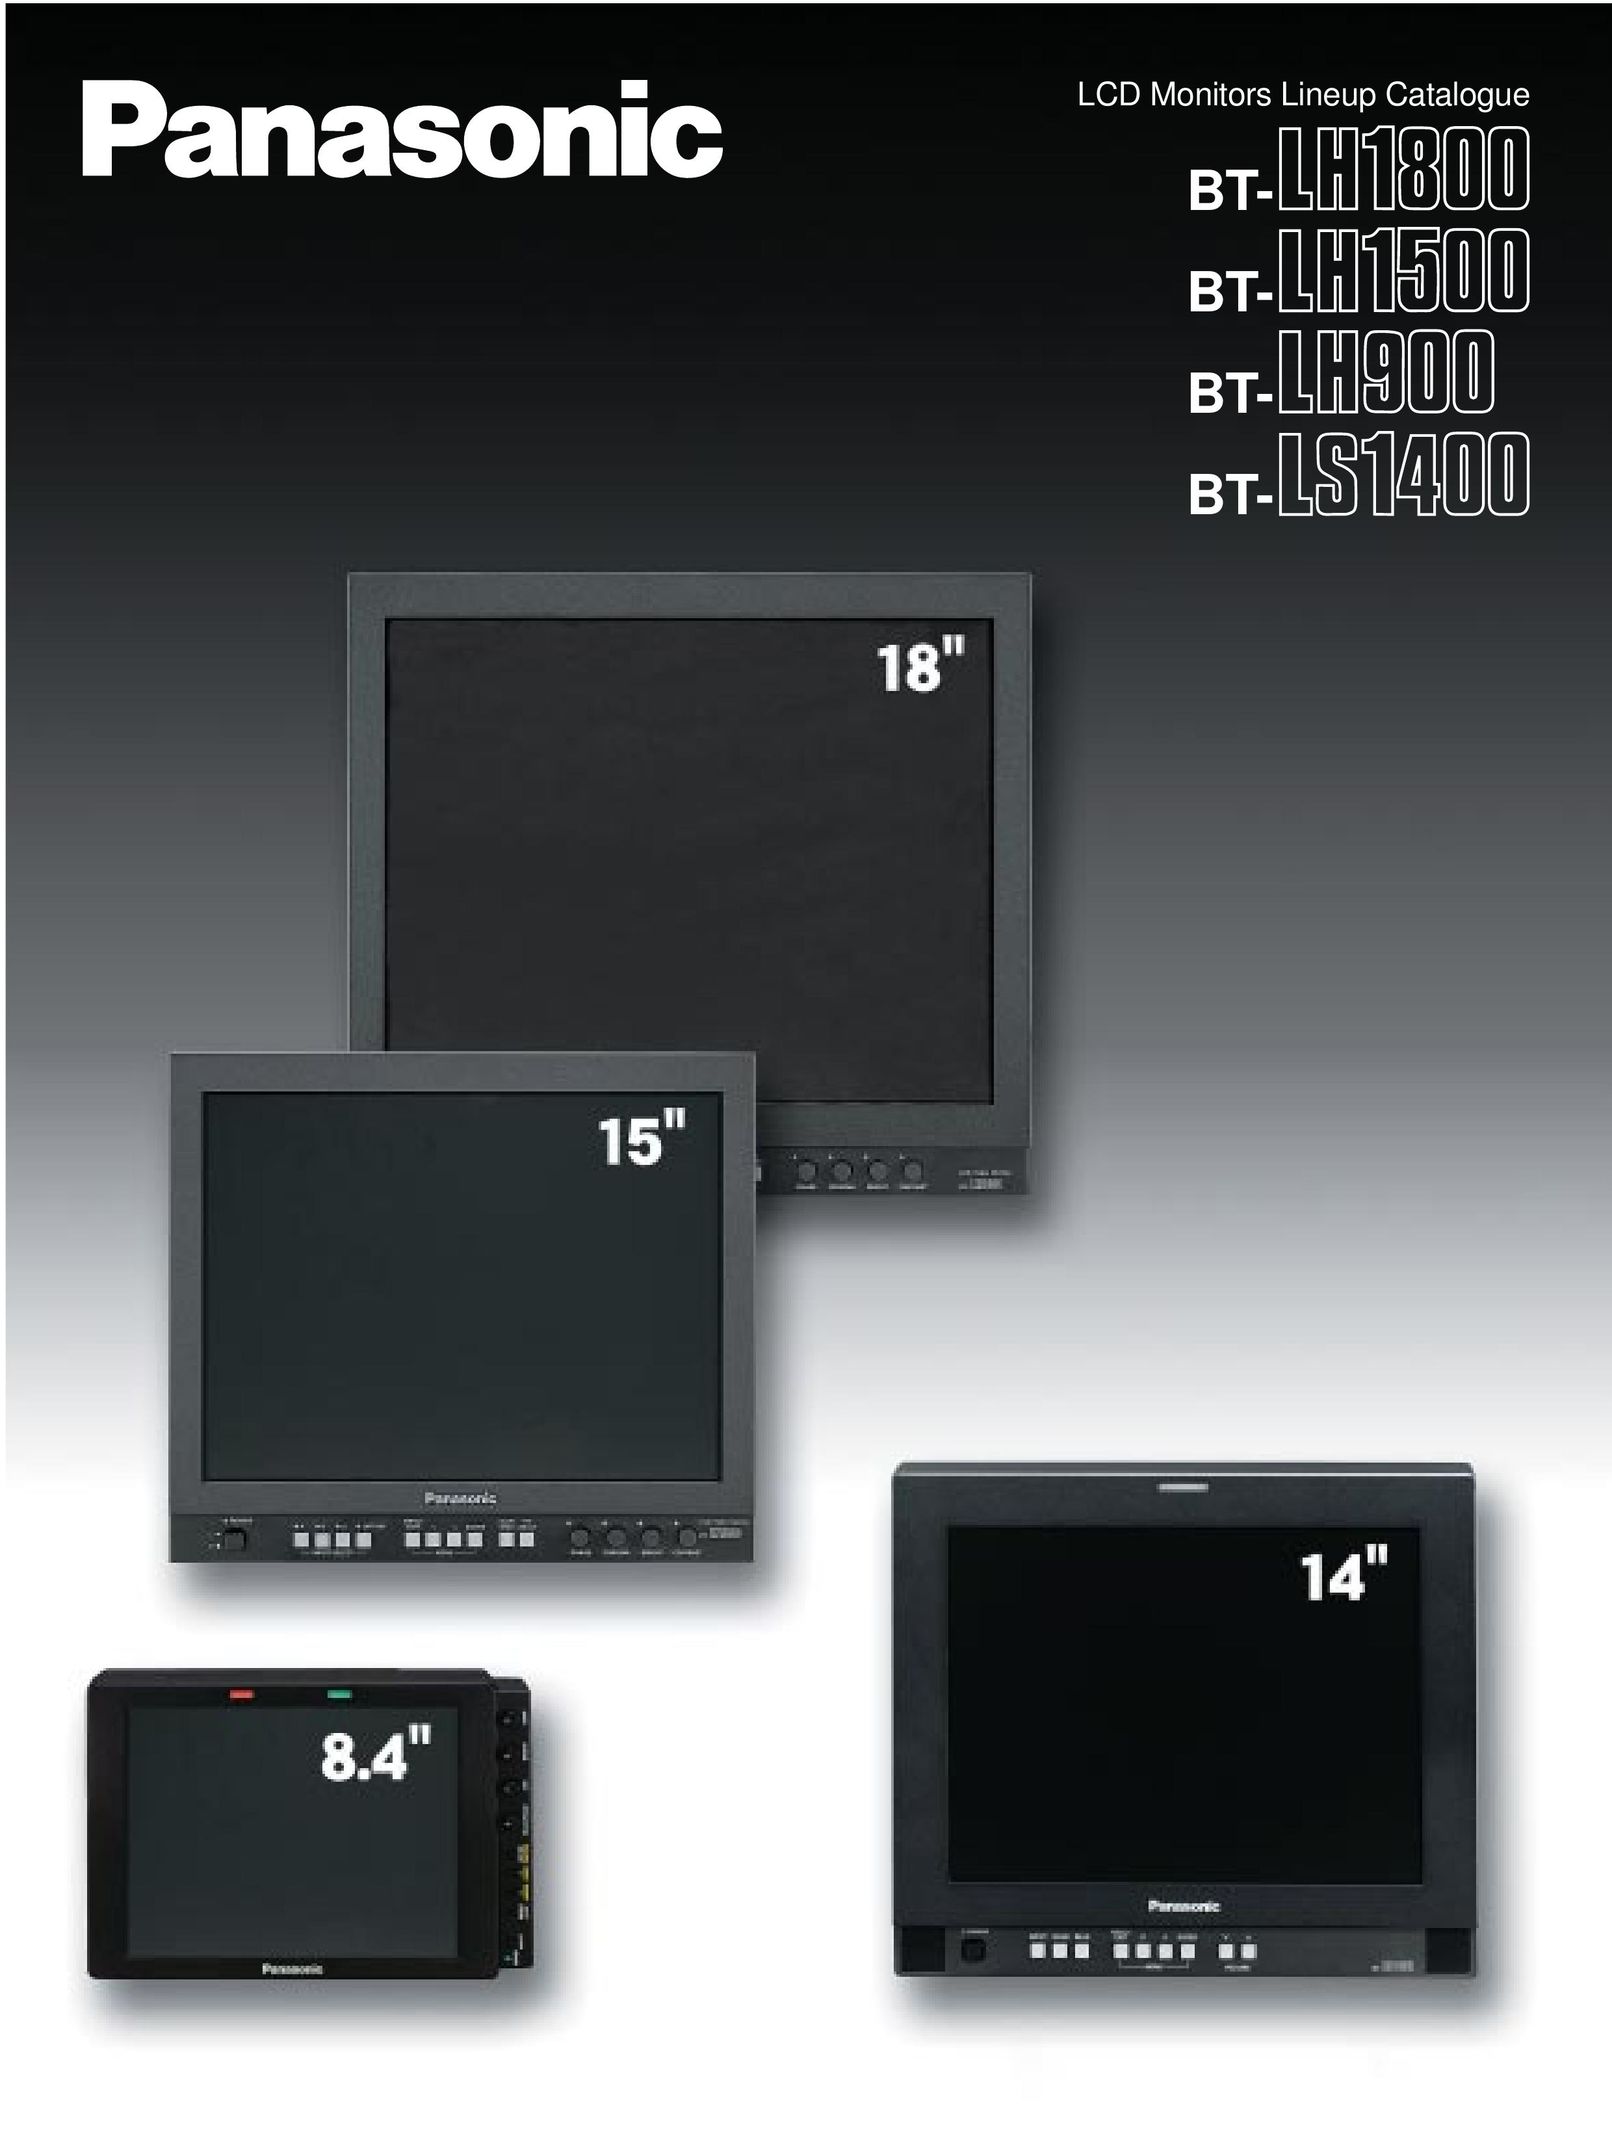 Panasonic BT-LH1500 Computer Monitor User Manual